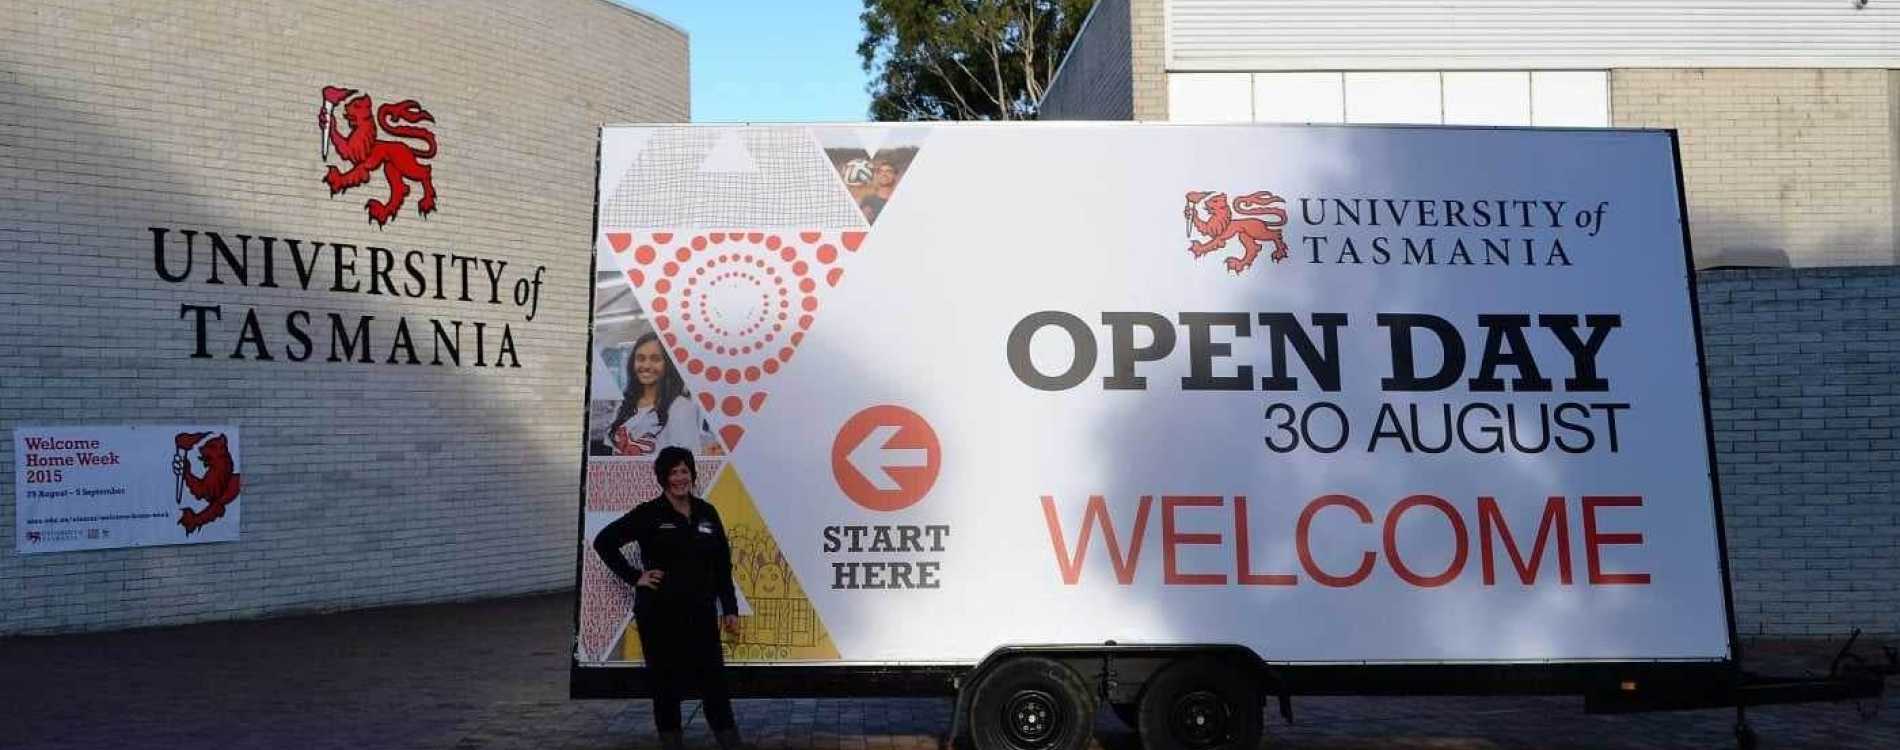 University Of Tasmania Mobile Billboard Trailer Signage